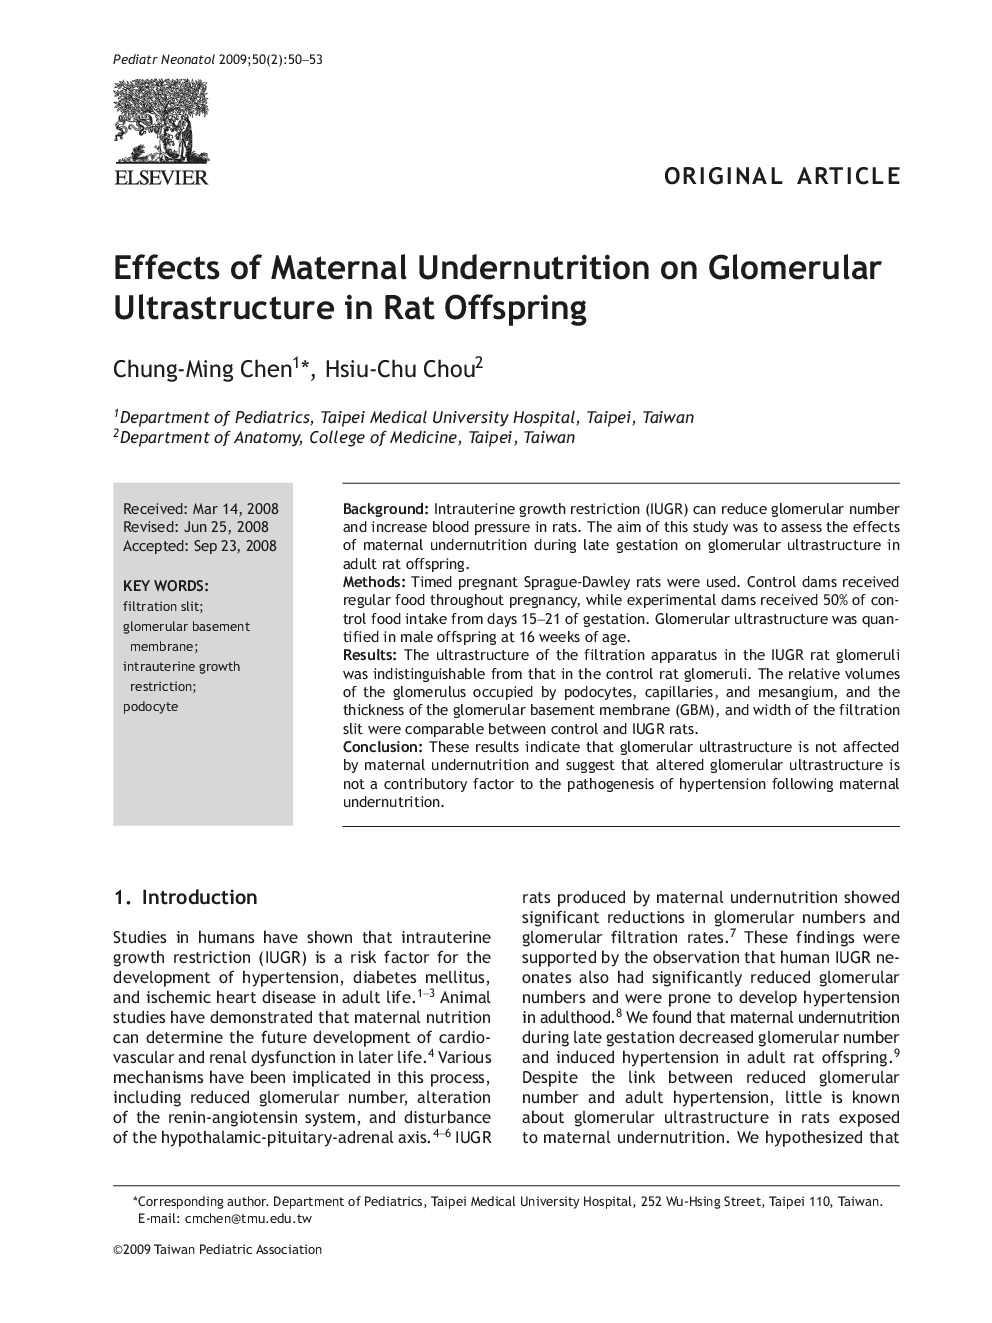 Effects of Maternal Undernutrition on Glomerular Ultrastructure in Rat Offspring